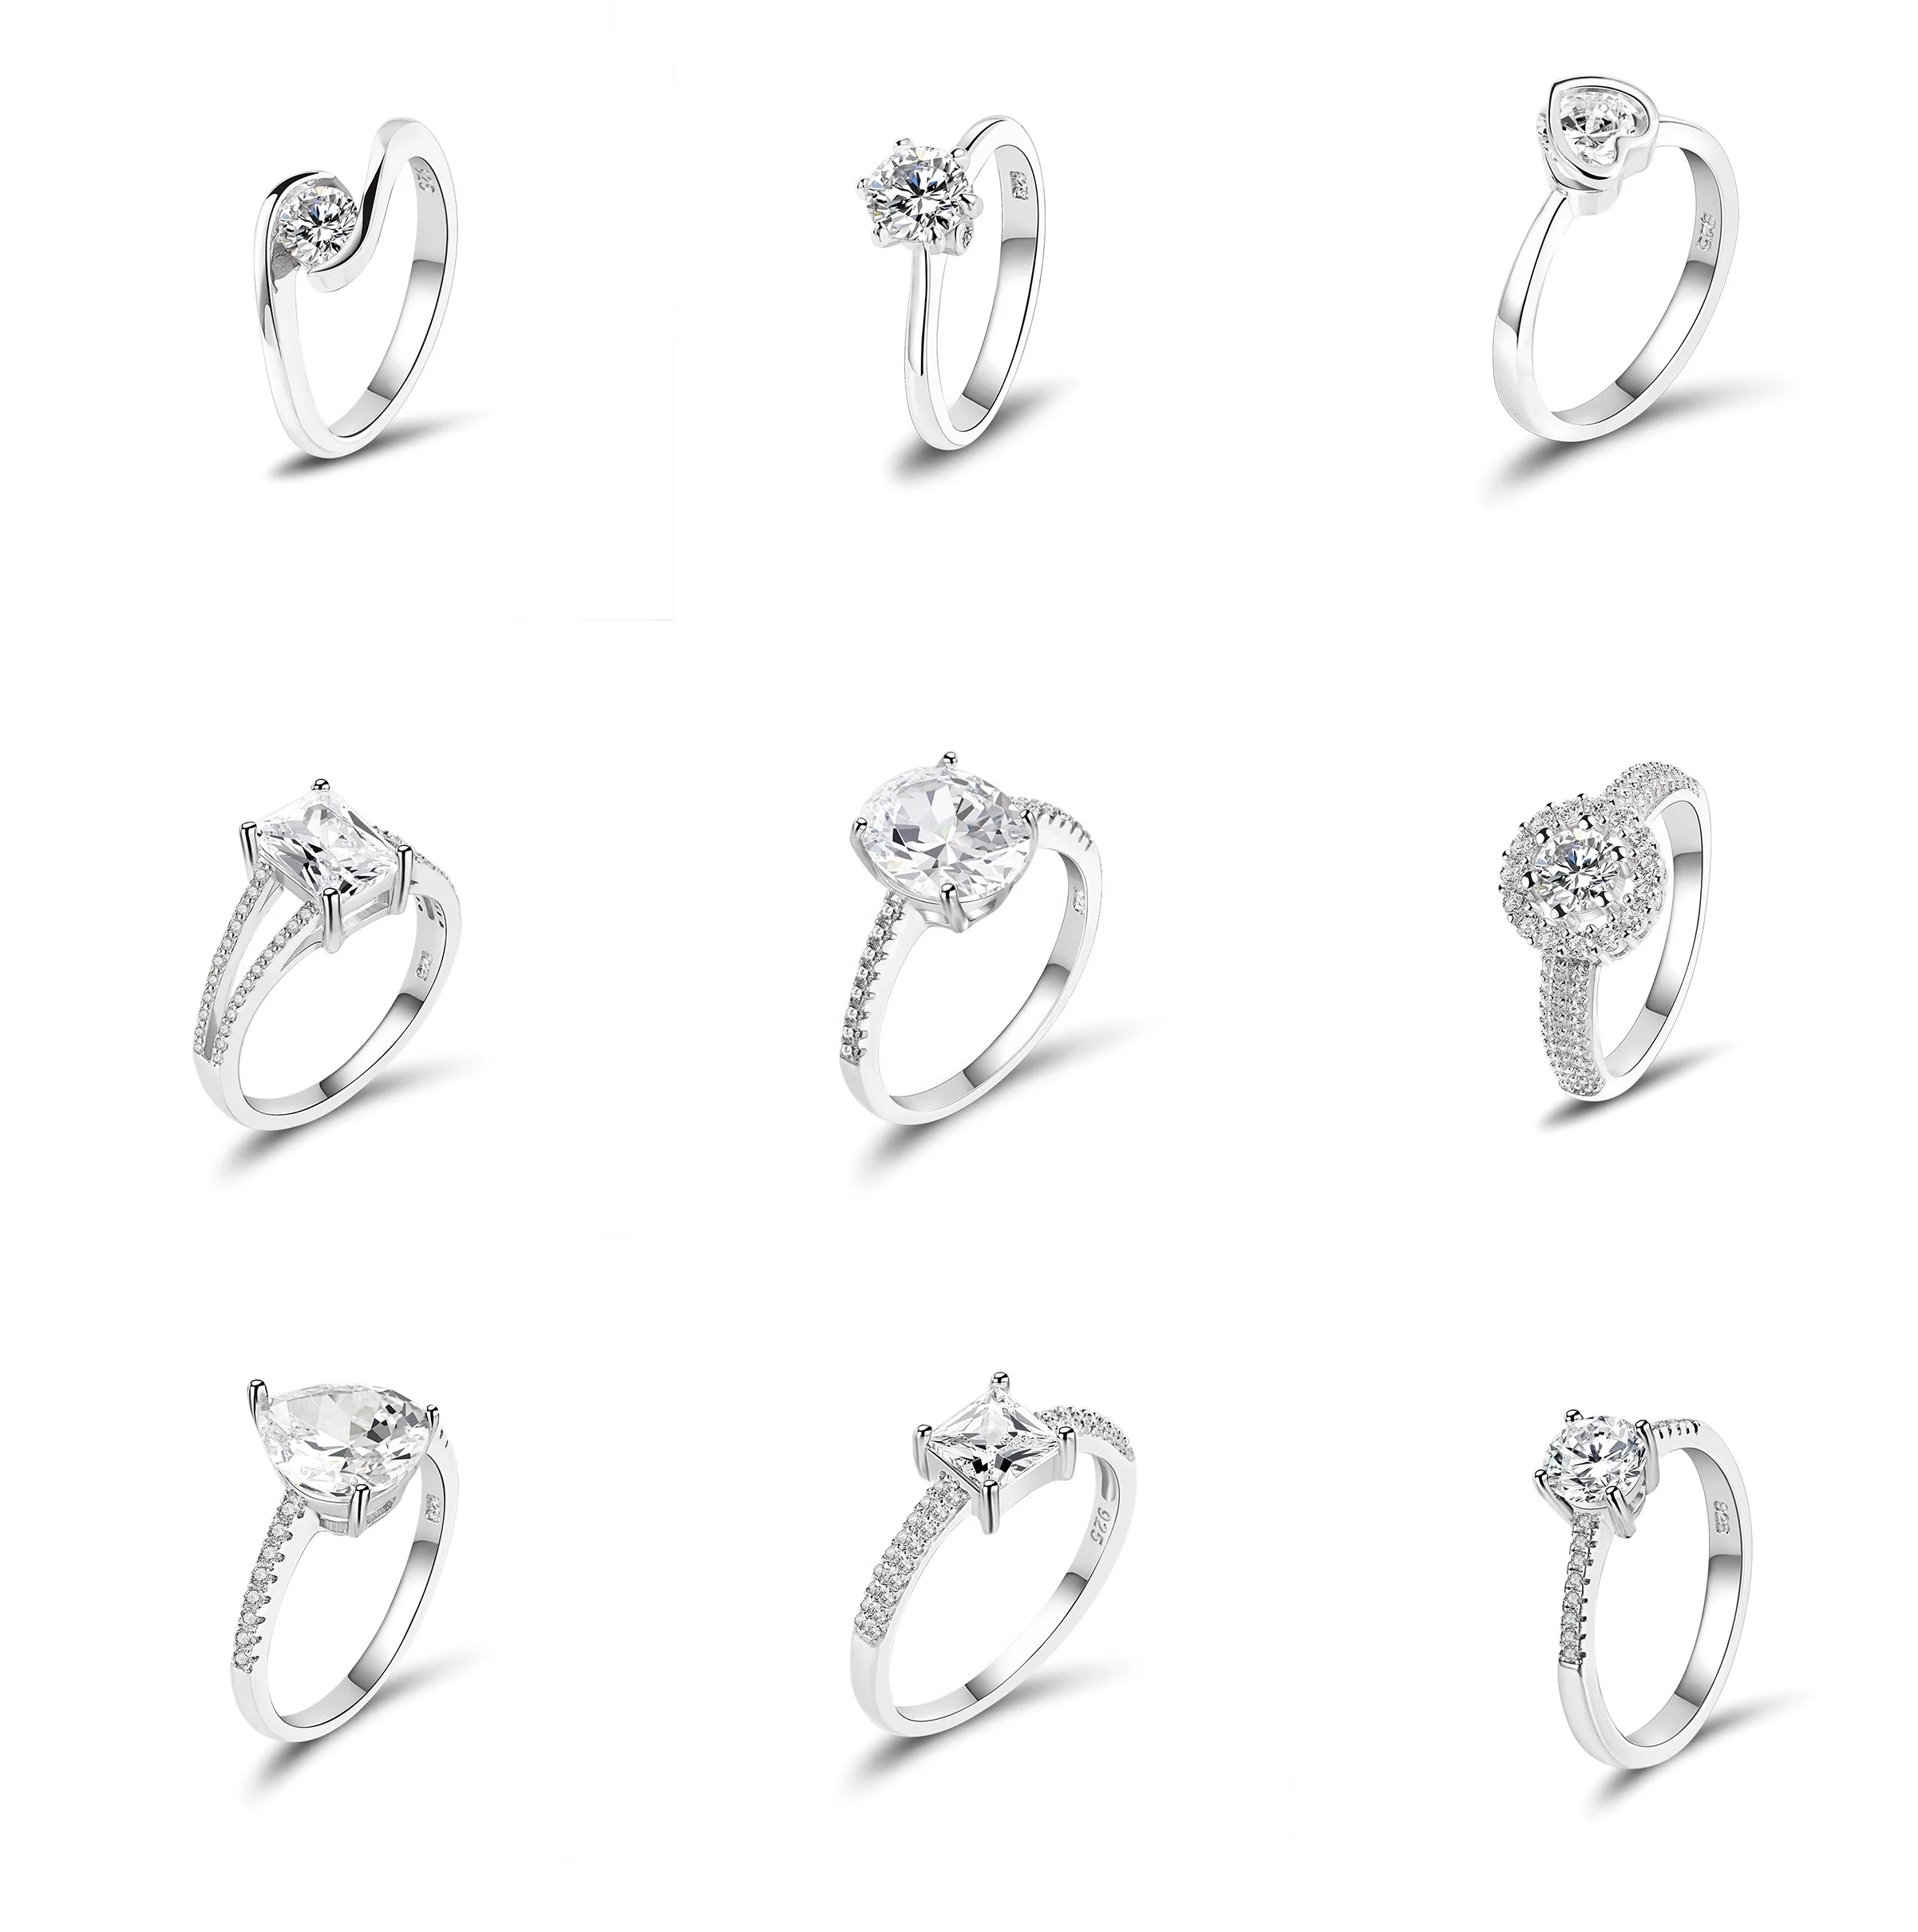 New fashion fine jewelry custom 925 sterling silver engagement wedding diamond gemstone rings for women (1600544296944)